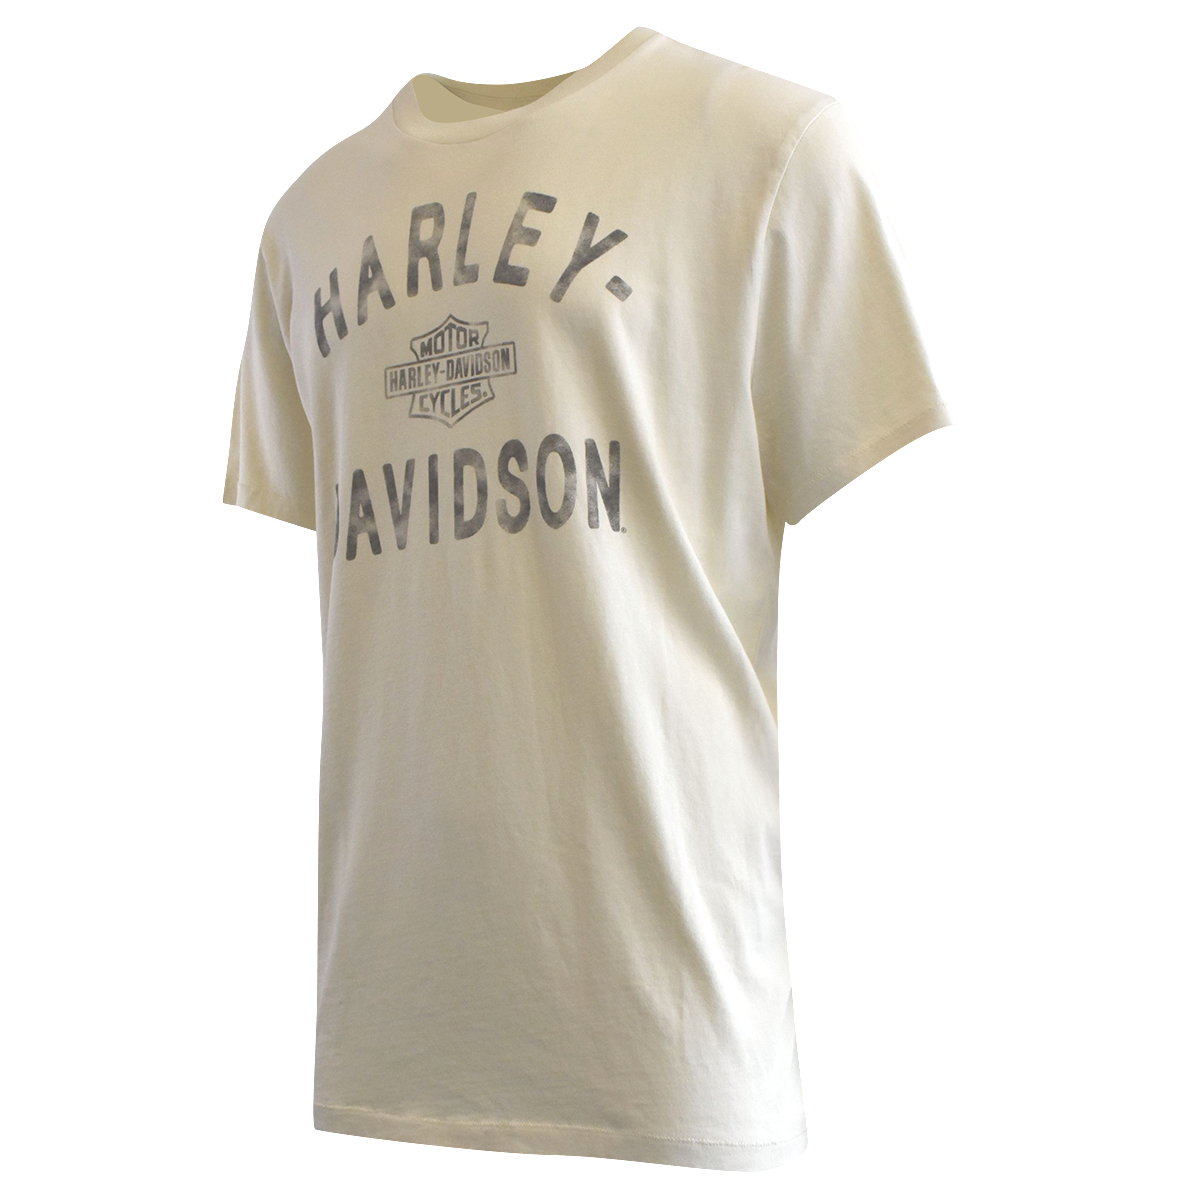 Harley-Davidson Men's T-Shirt Cream Chalk Letter Graphic Print (S86)